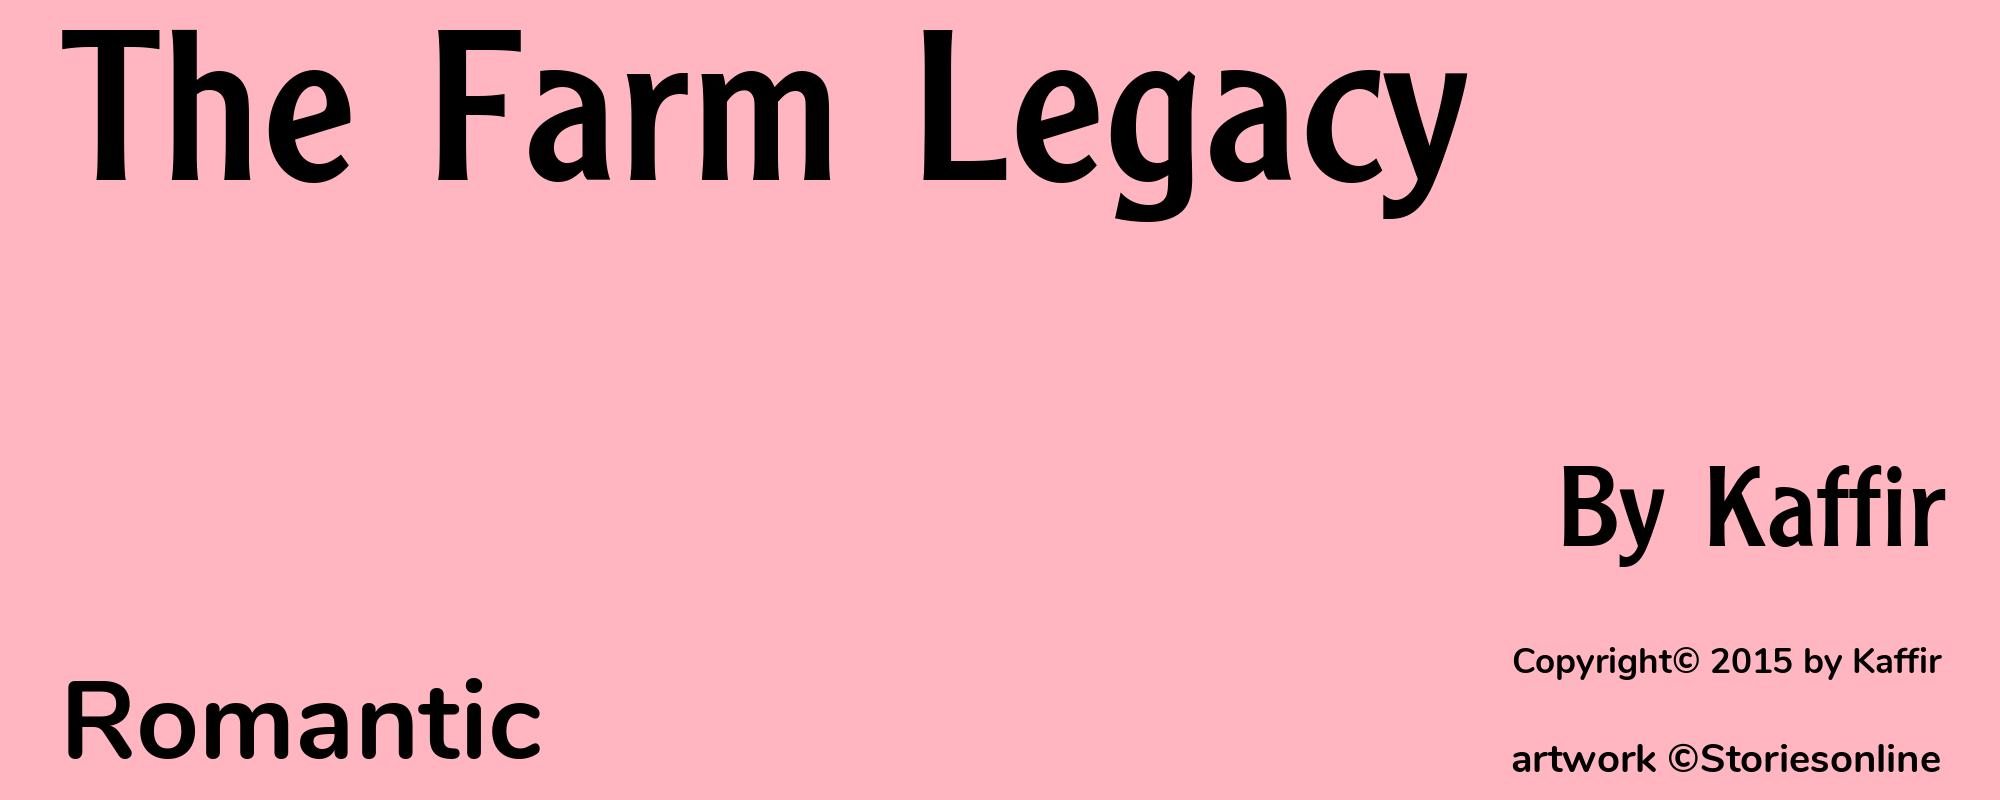 The Farm Legacy - Cover